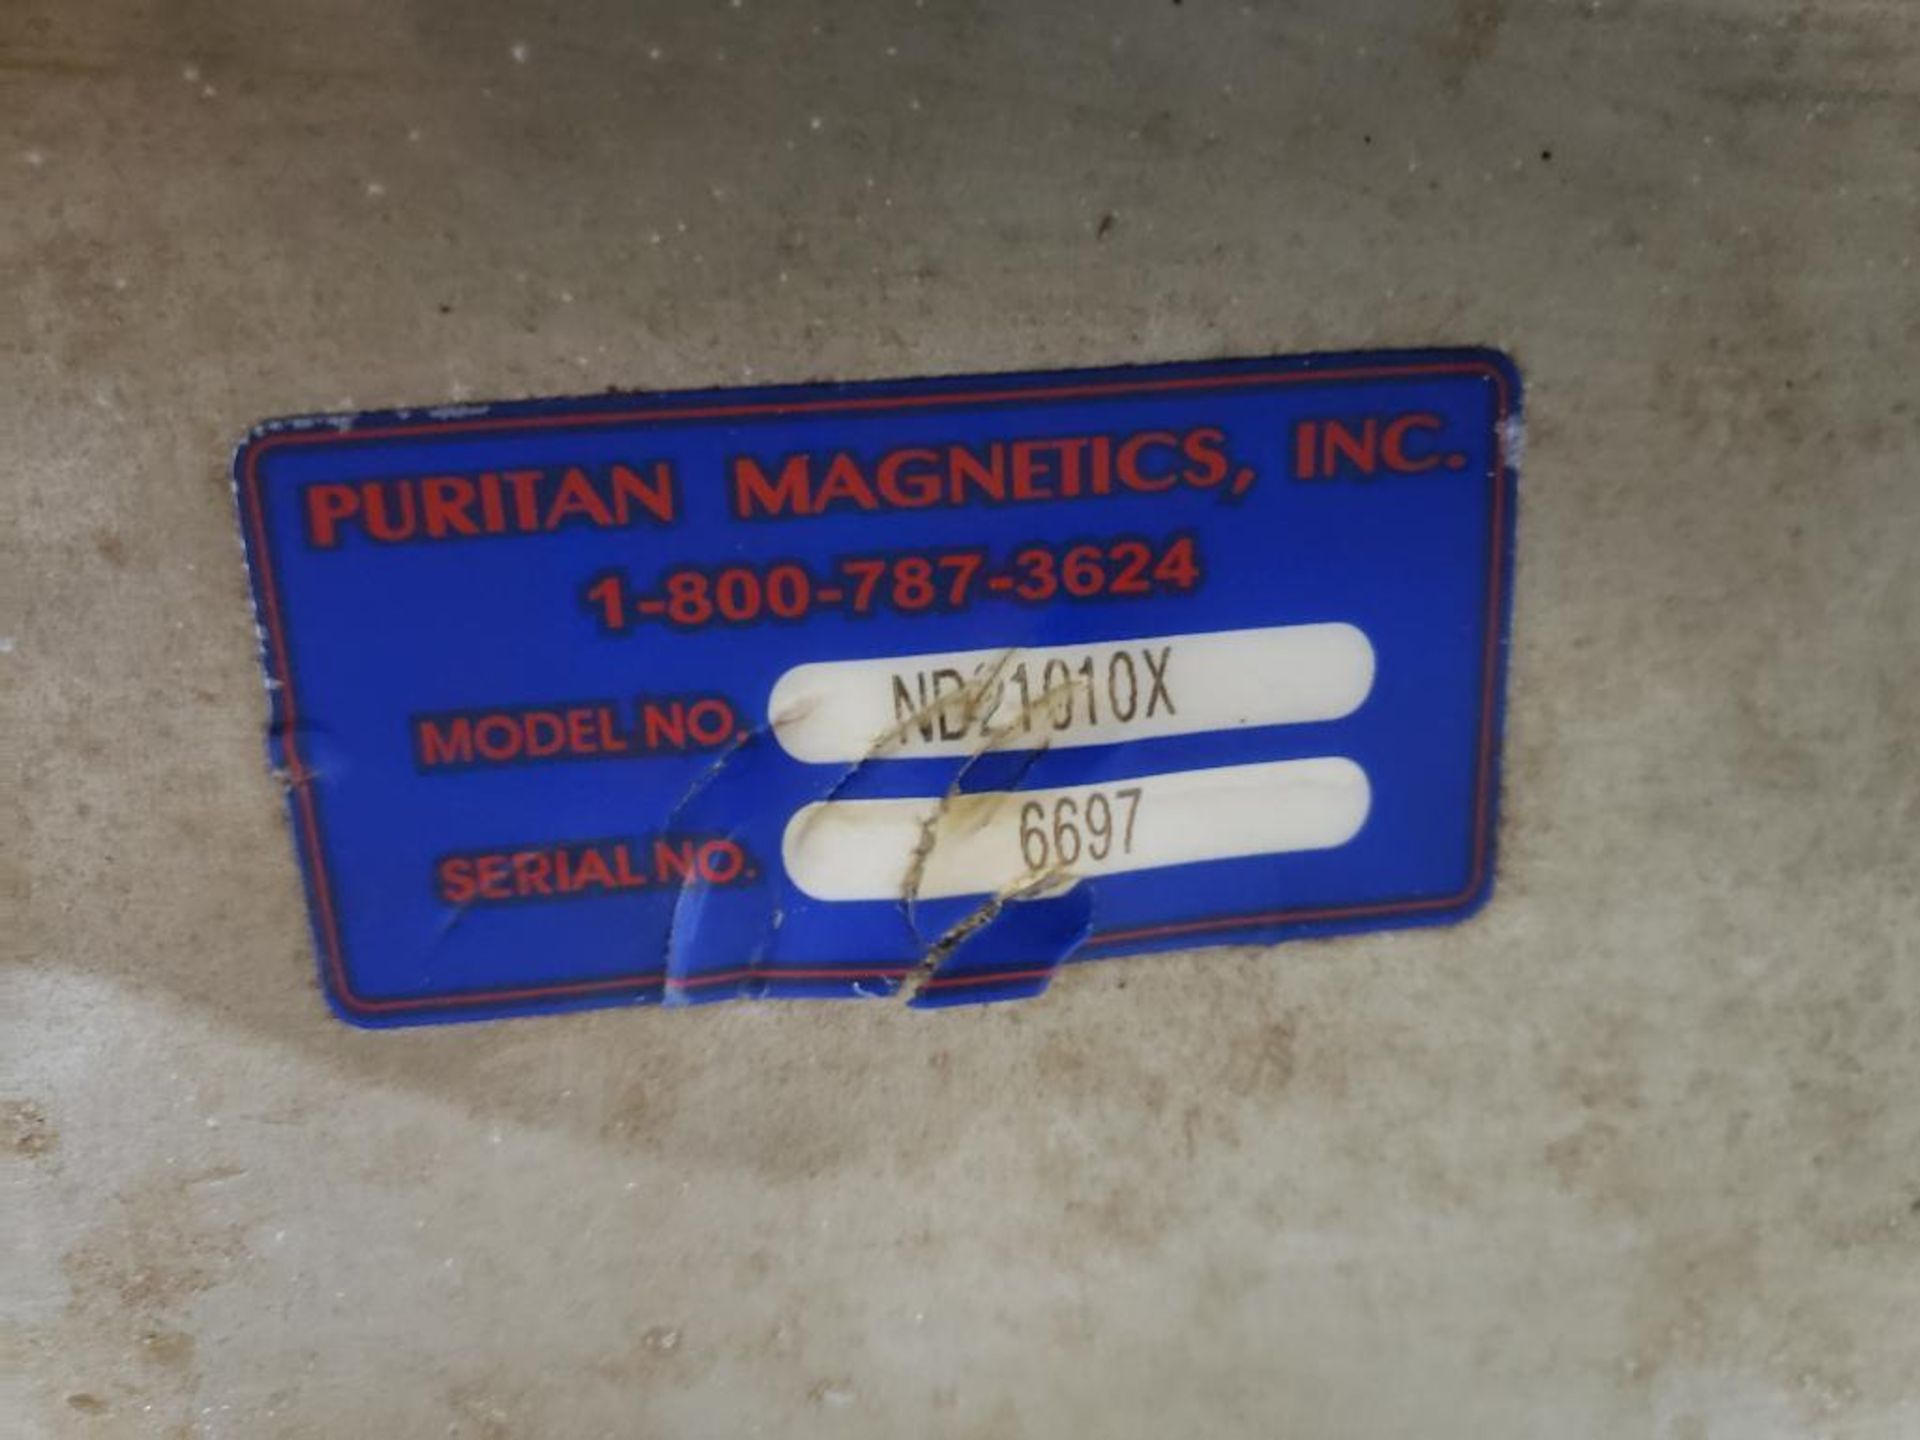 Qty 2 - Puritan Magnetics magnetic separator. Model ND21010X. - Image 3 of 8